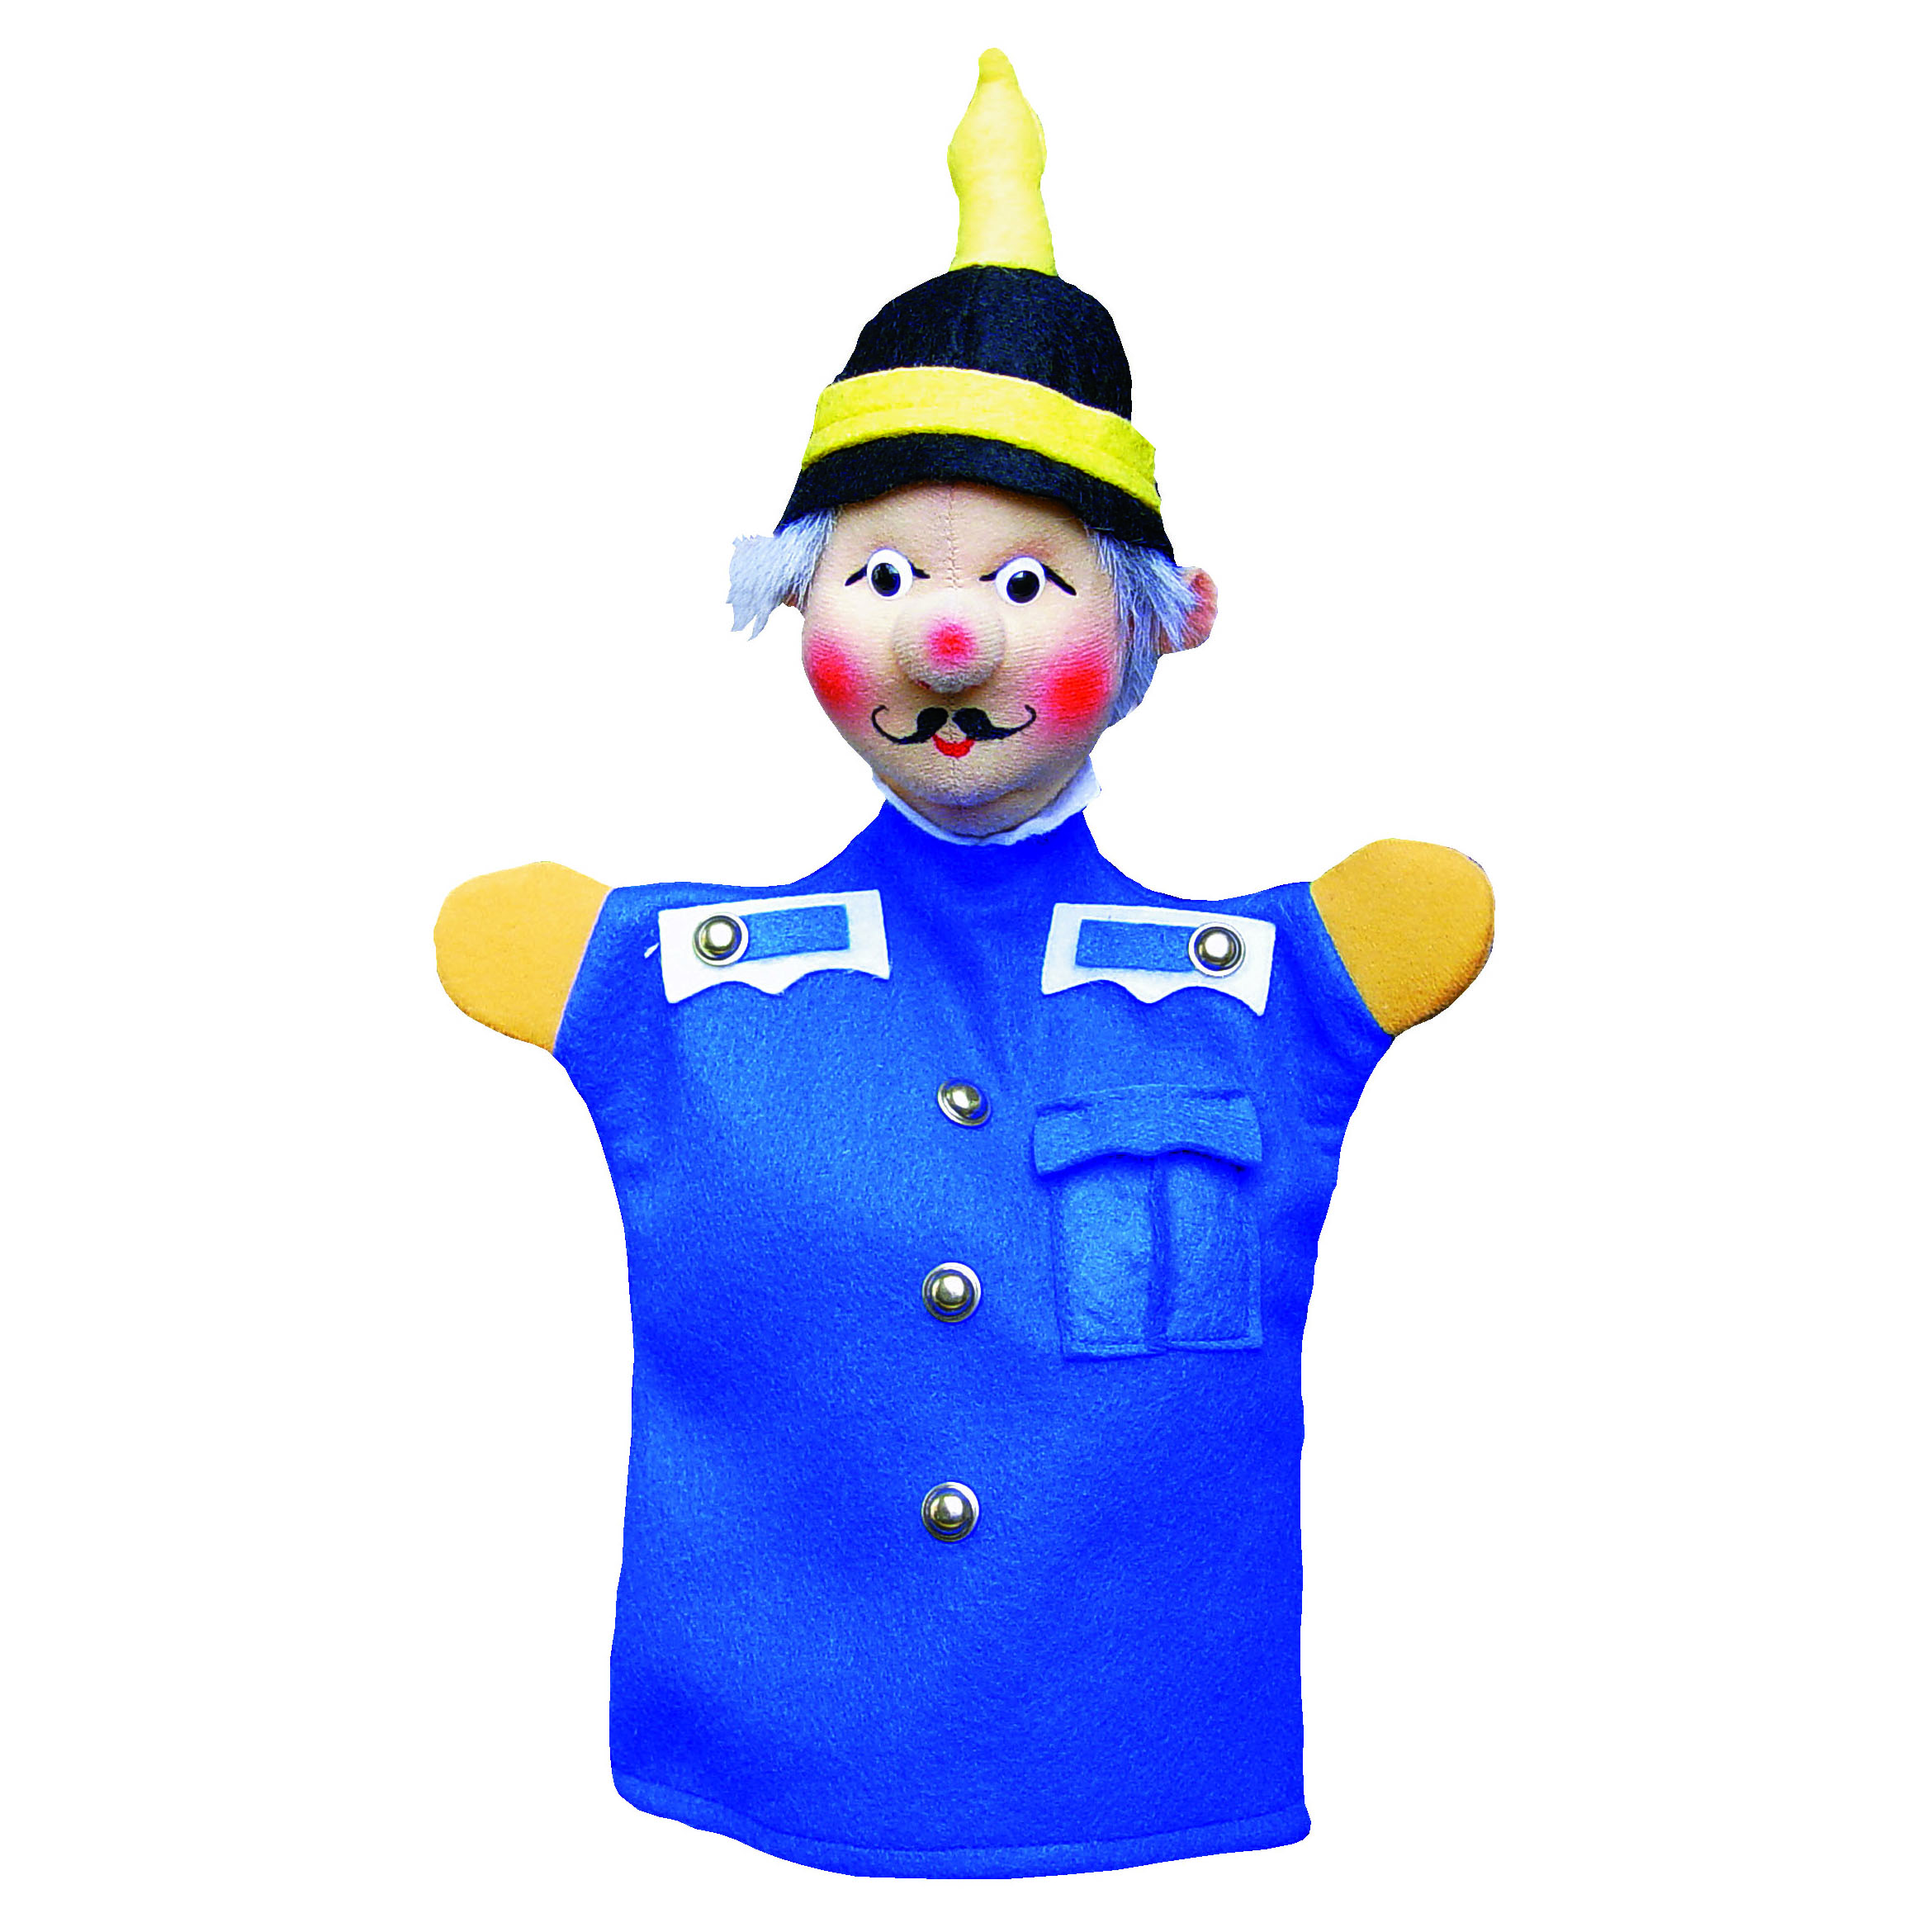 Hand puppet sergeant - KERSA classic